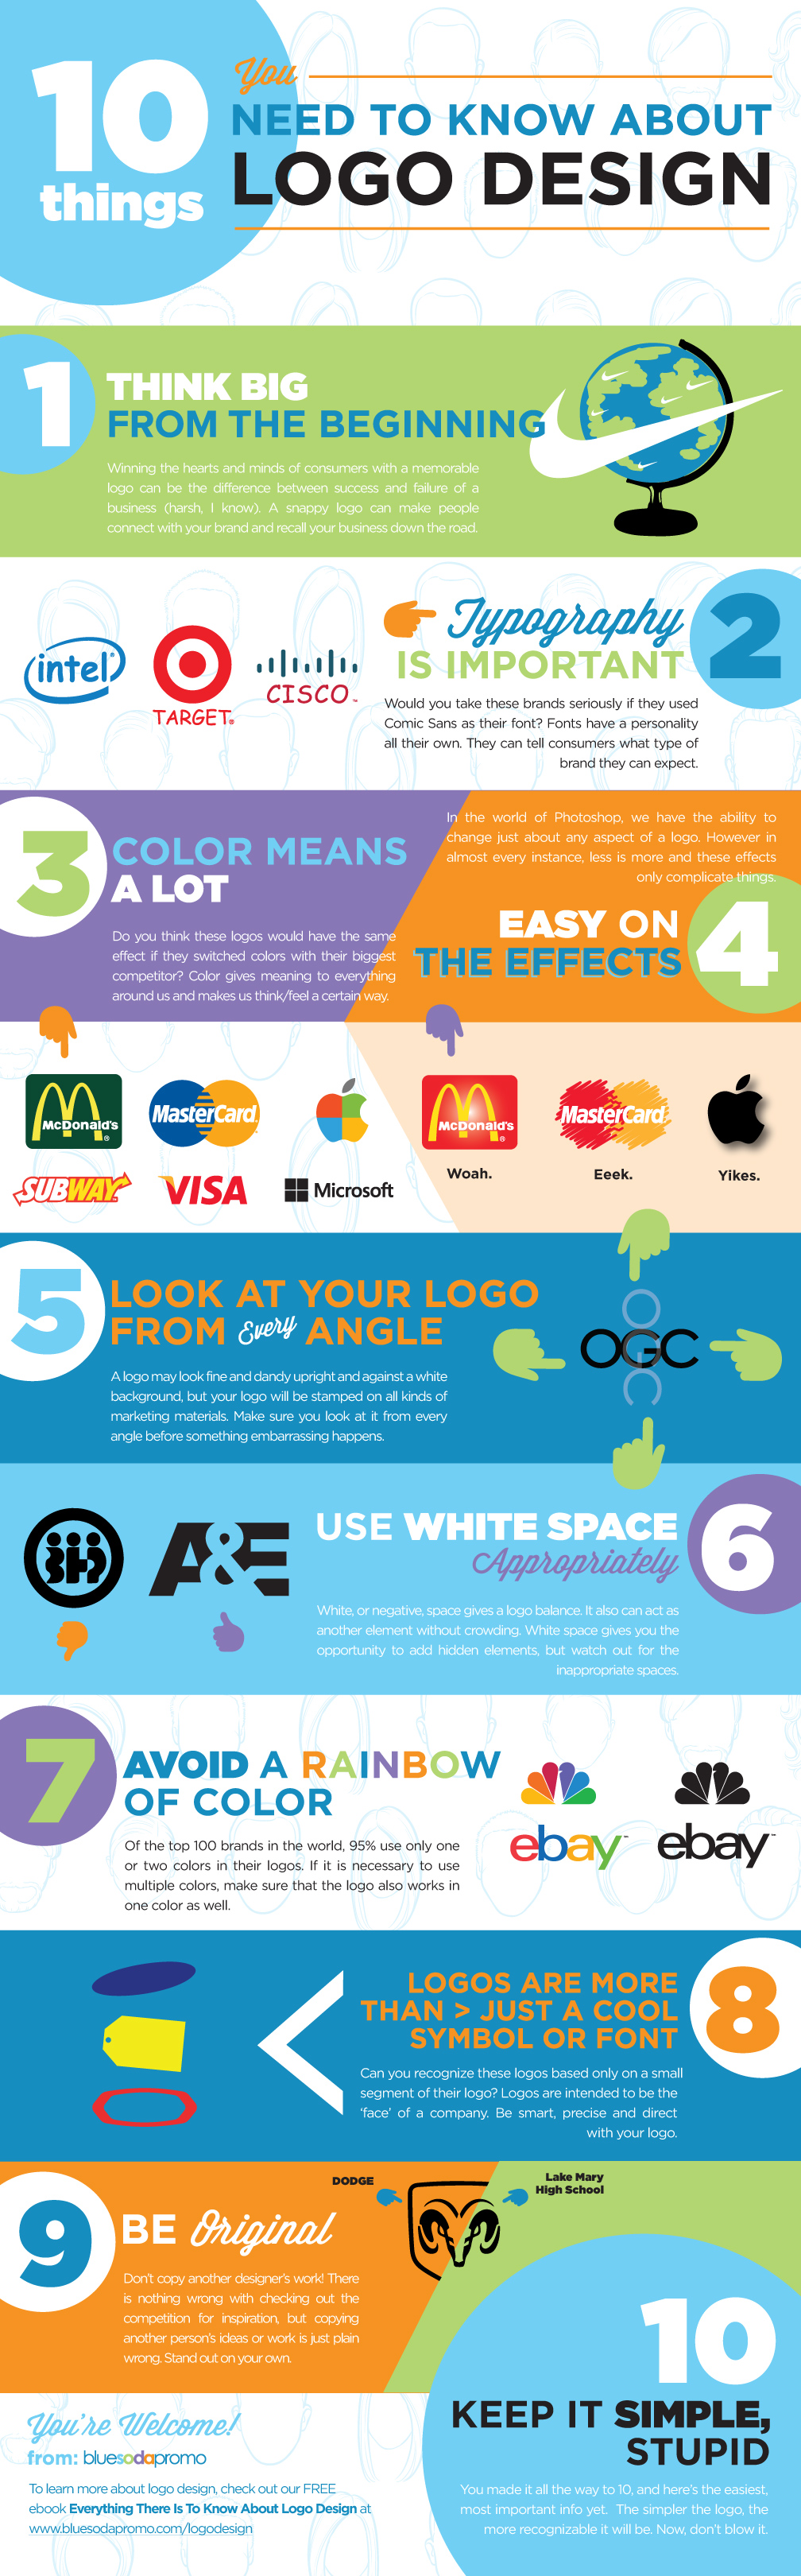 logo design infographic